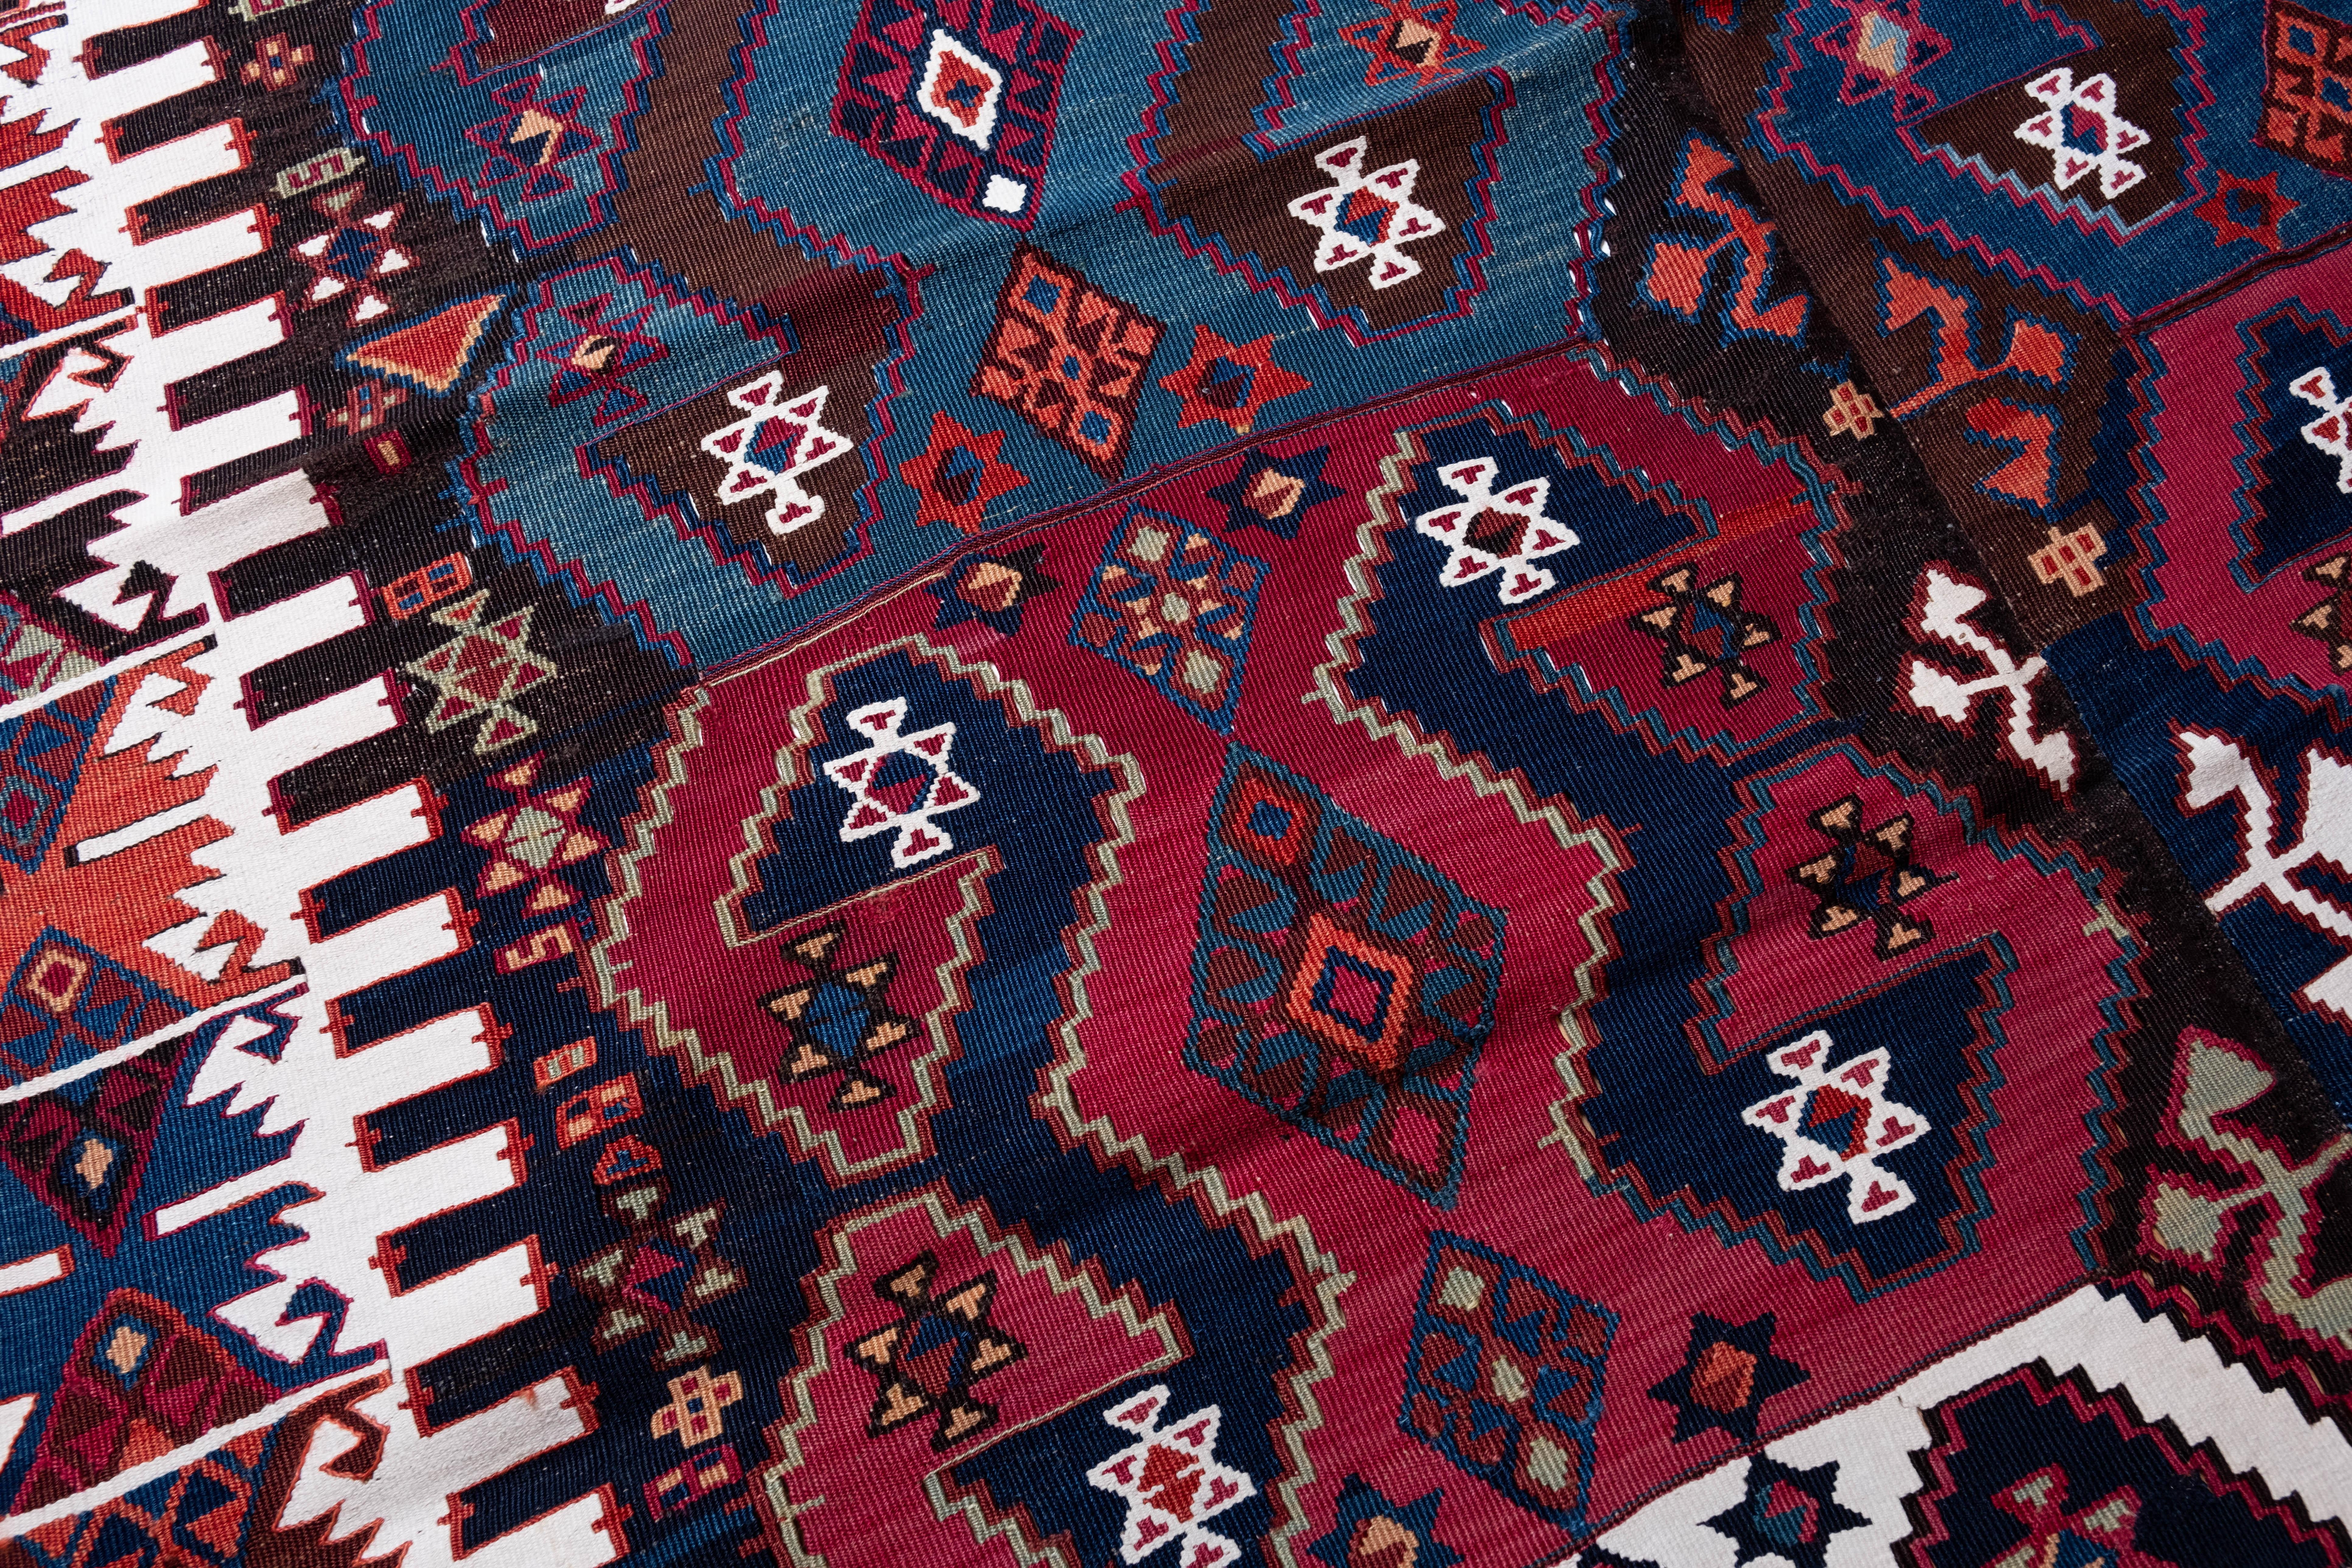 Hand-Woven Antique Reyhanli Kilim Rug Wool Old Eastern Anatolian Turkish Carpet For Sale